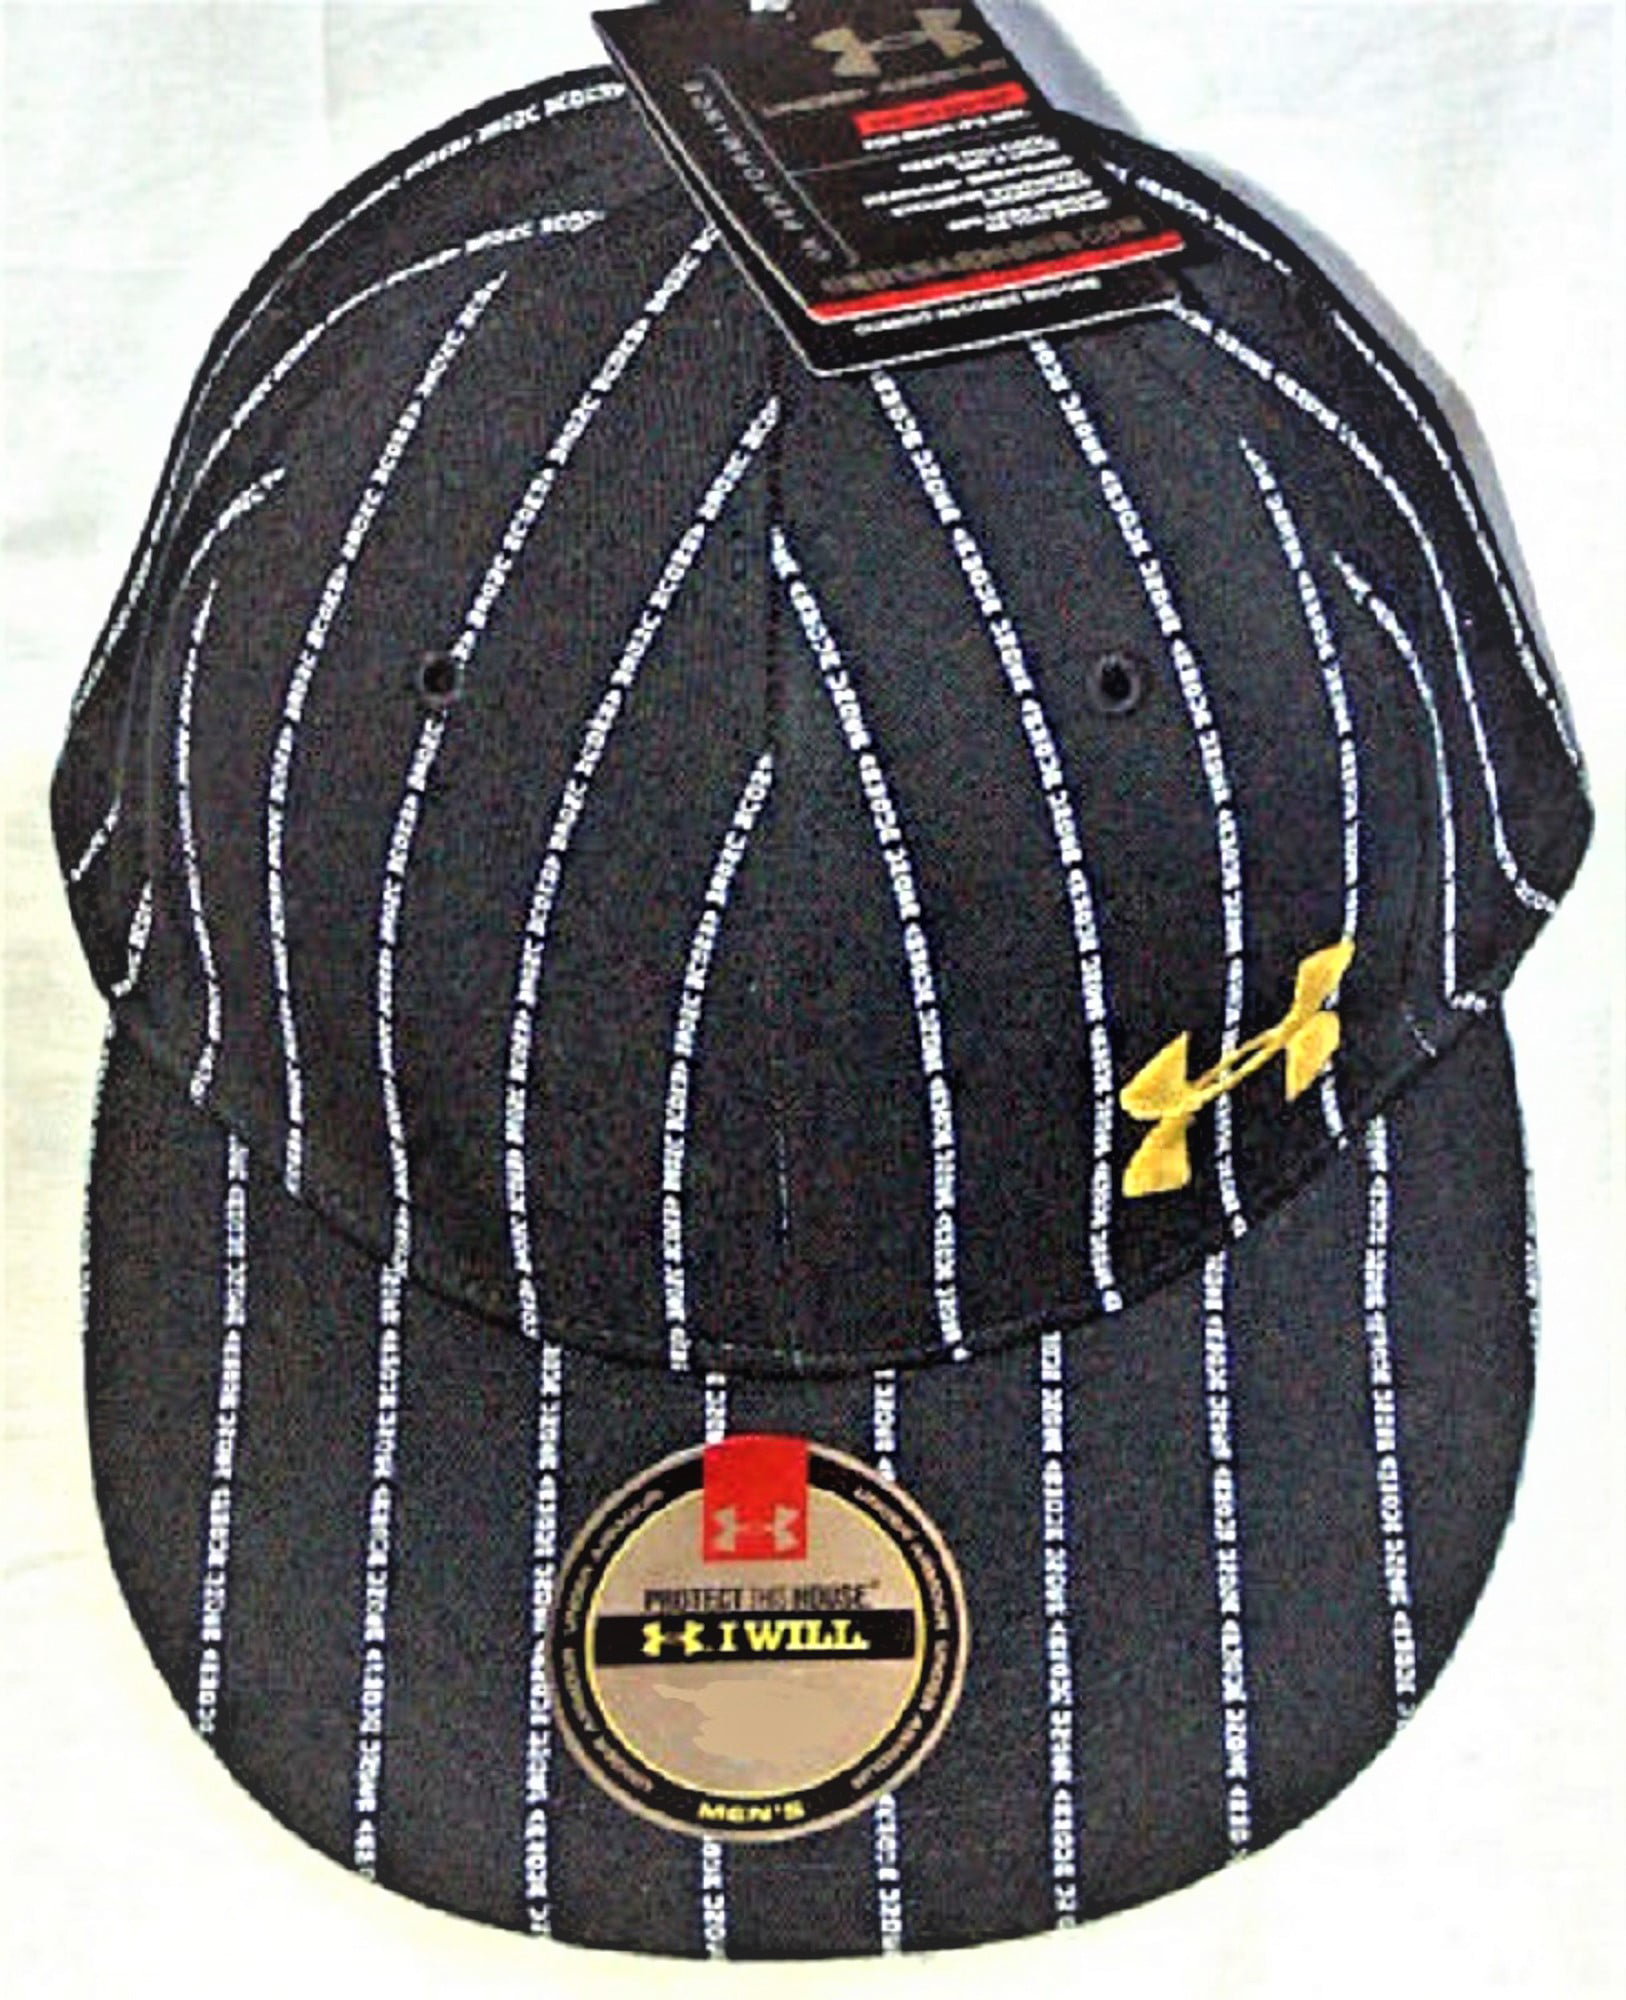 Under Armour Men's Fitted Flat Brim Cap, Size 7 5/8, Black